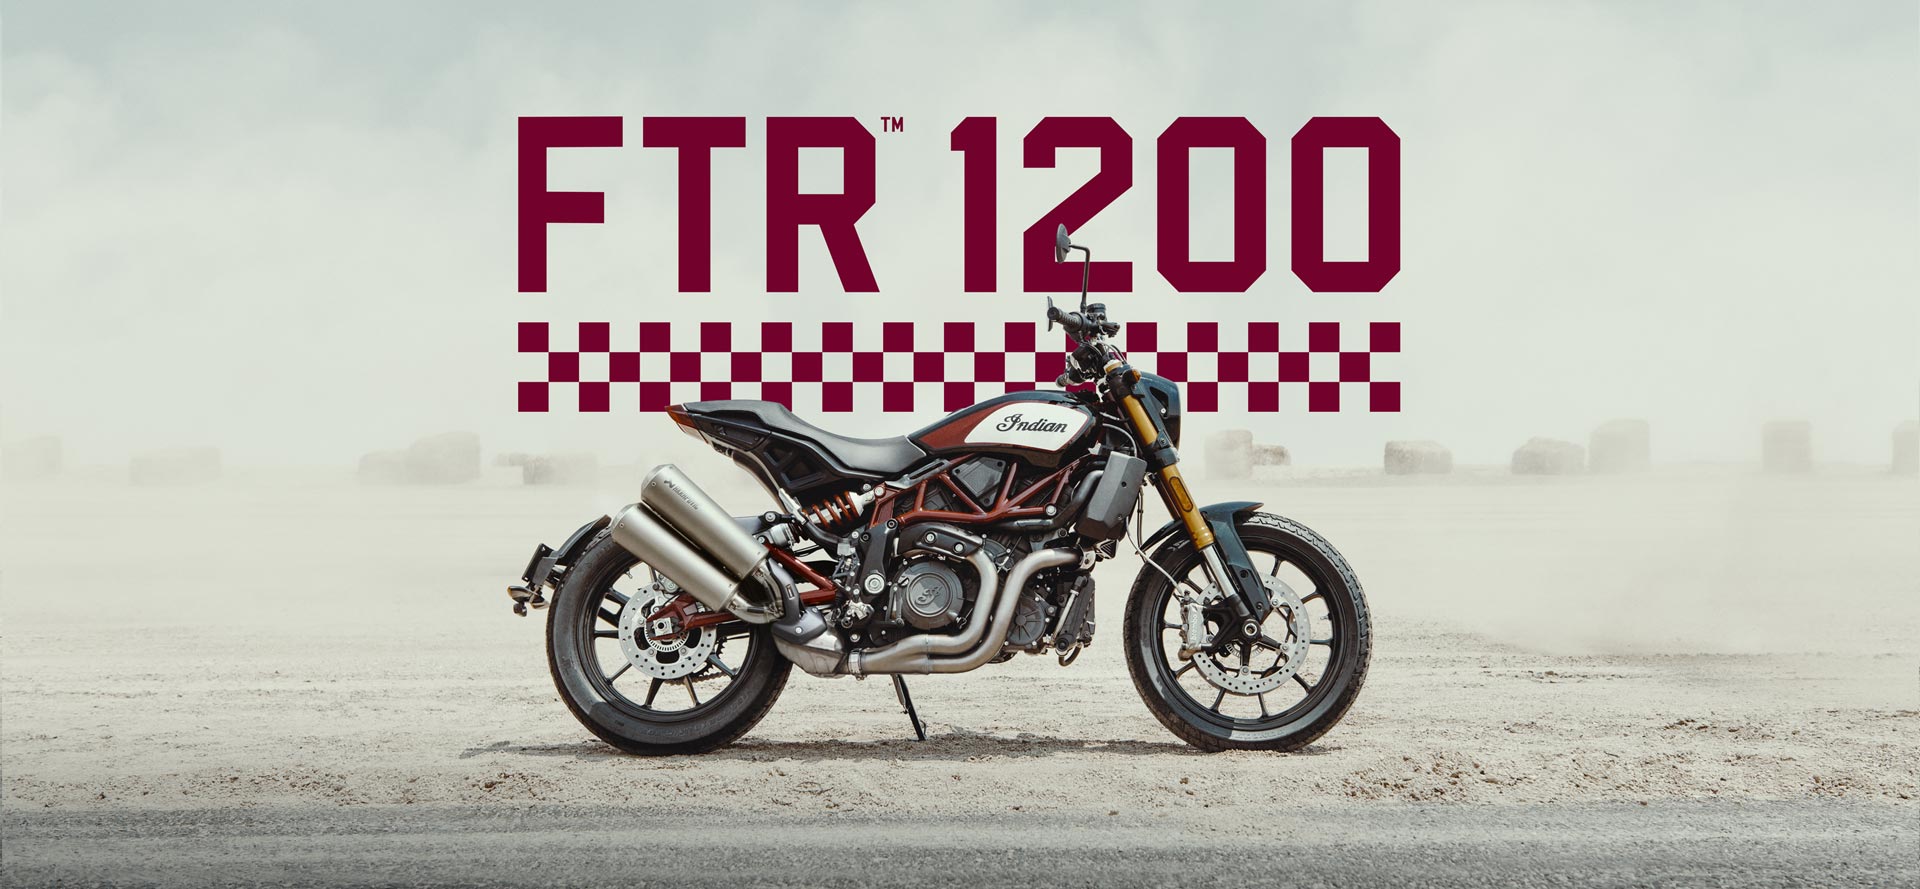 Indian Motorcycles Australia 2021 Ftr 1200 Family